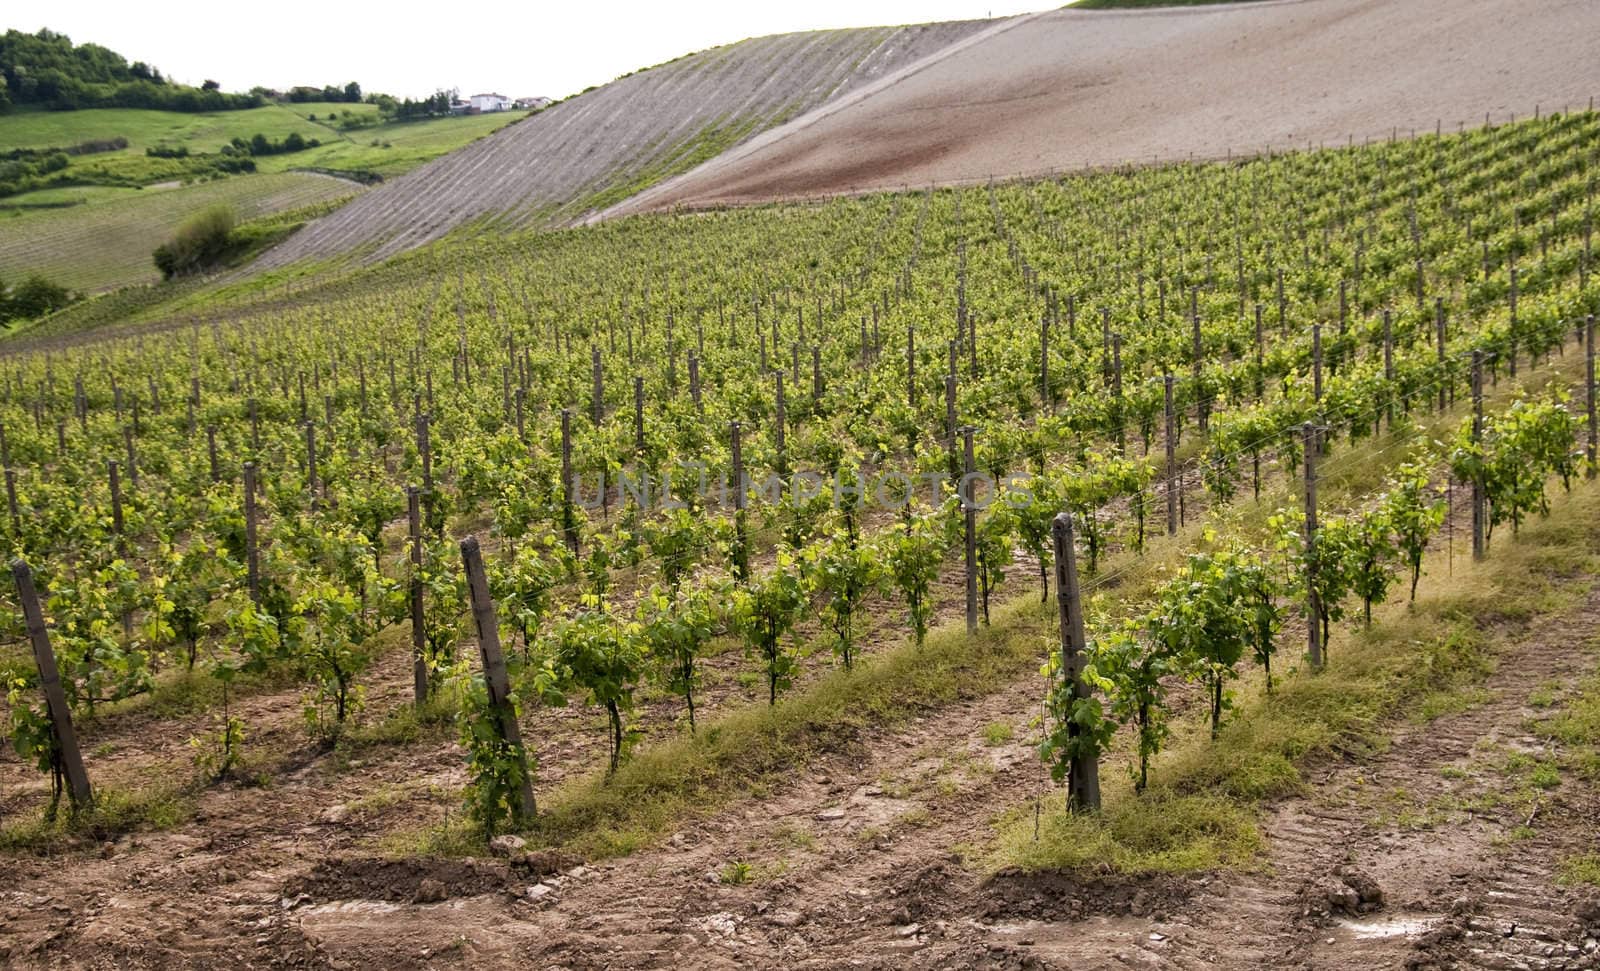 Landscape of vine and grapes